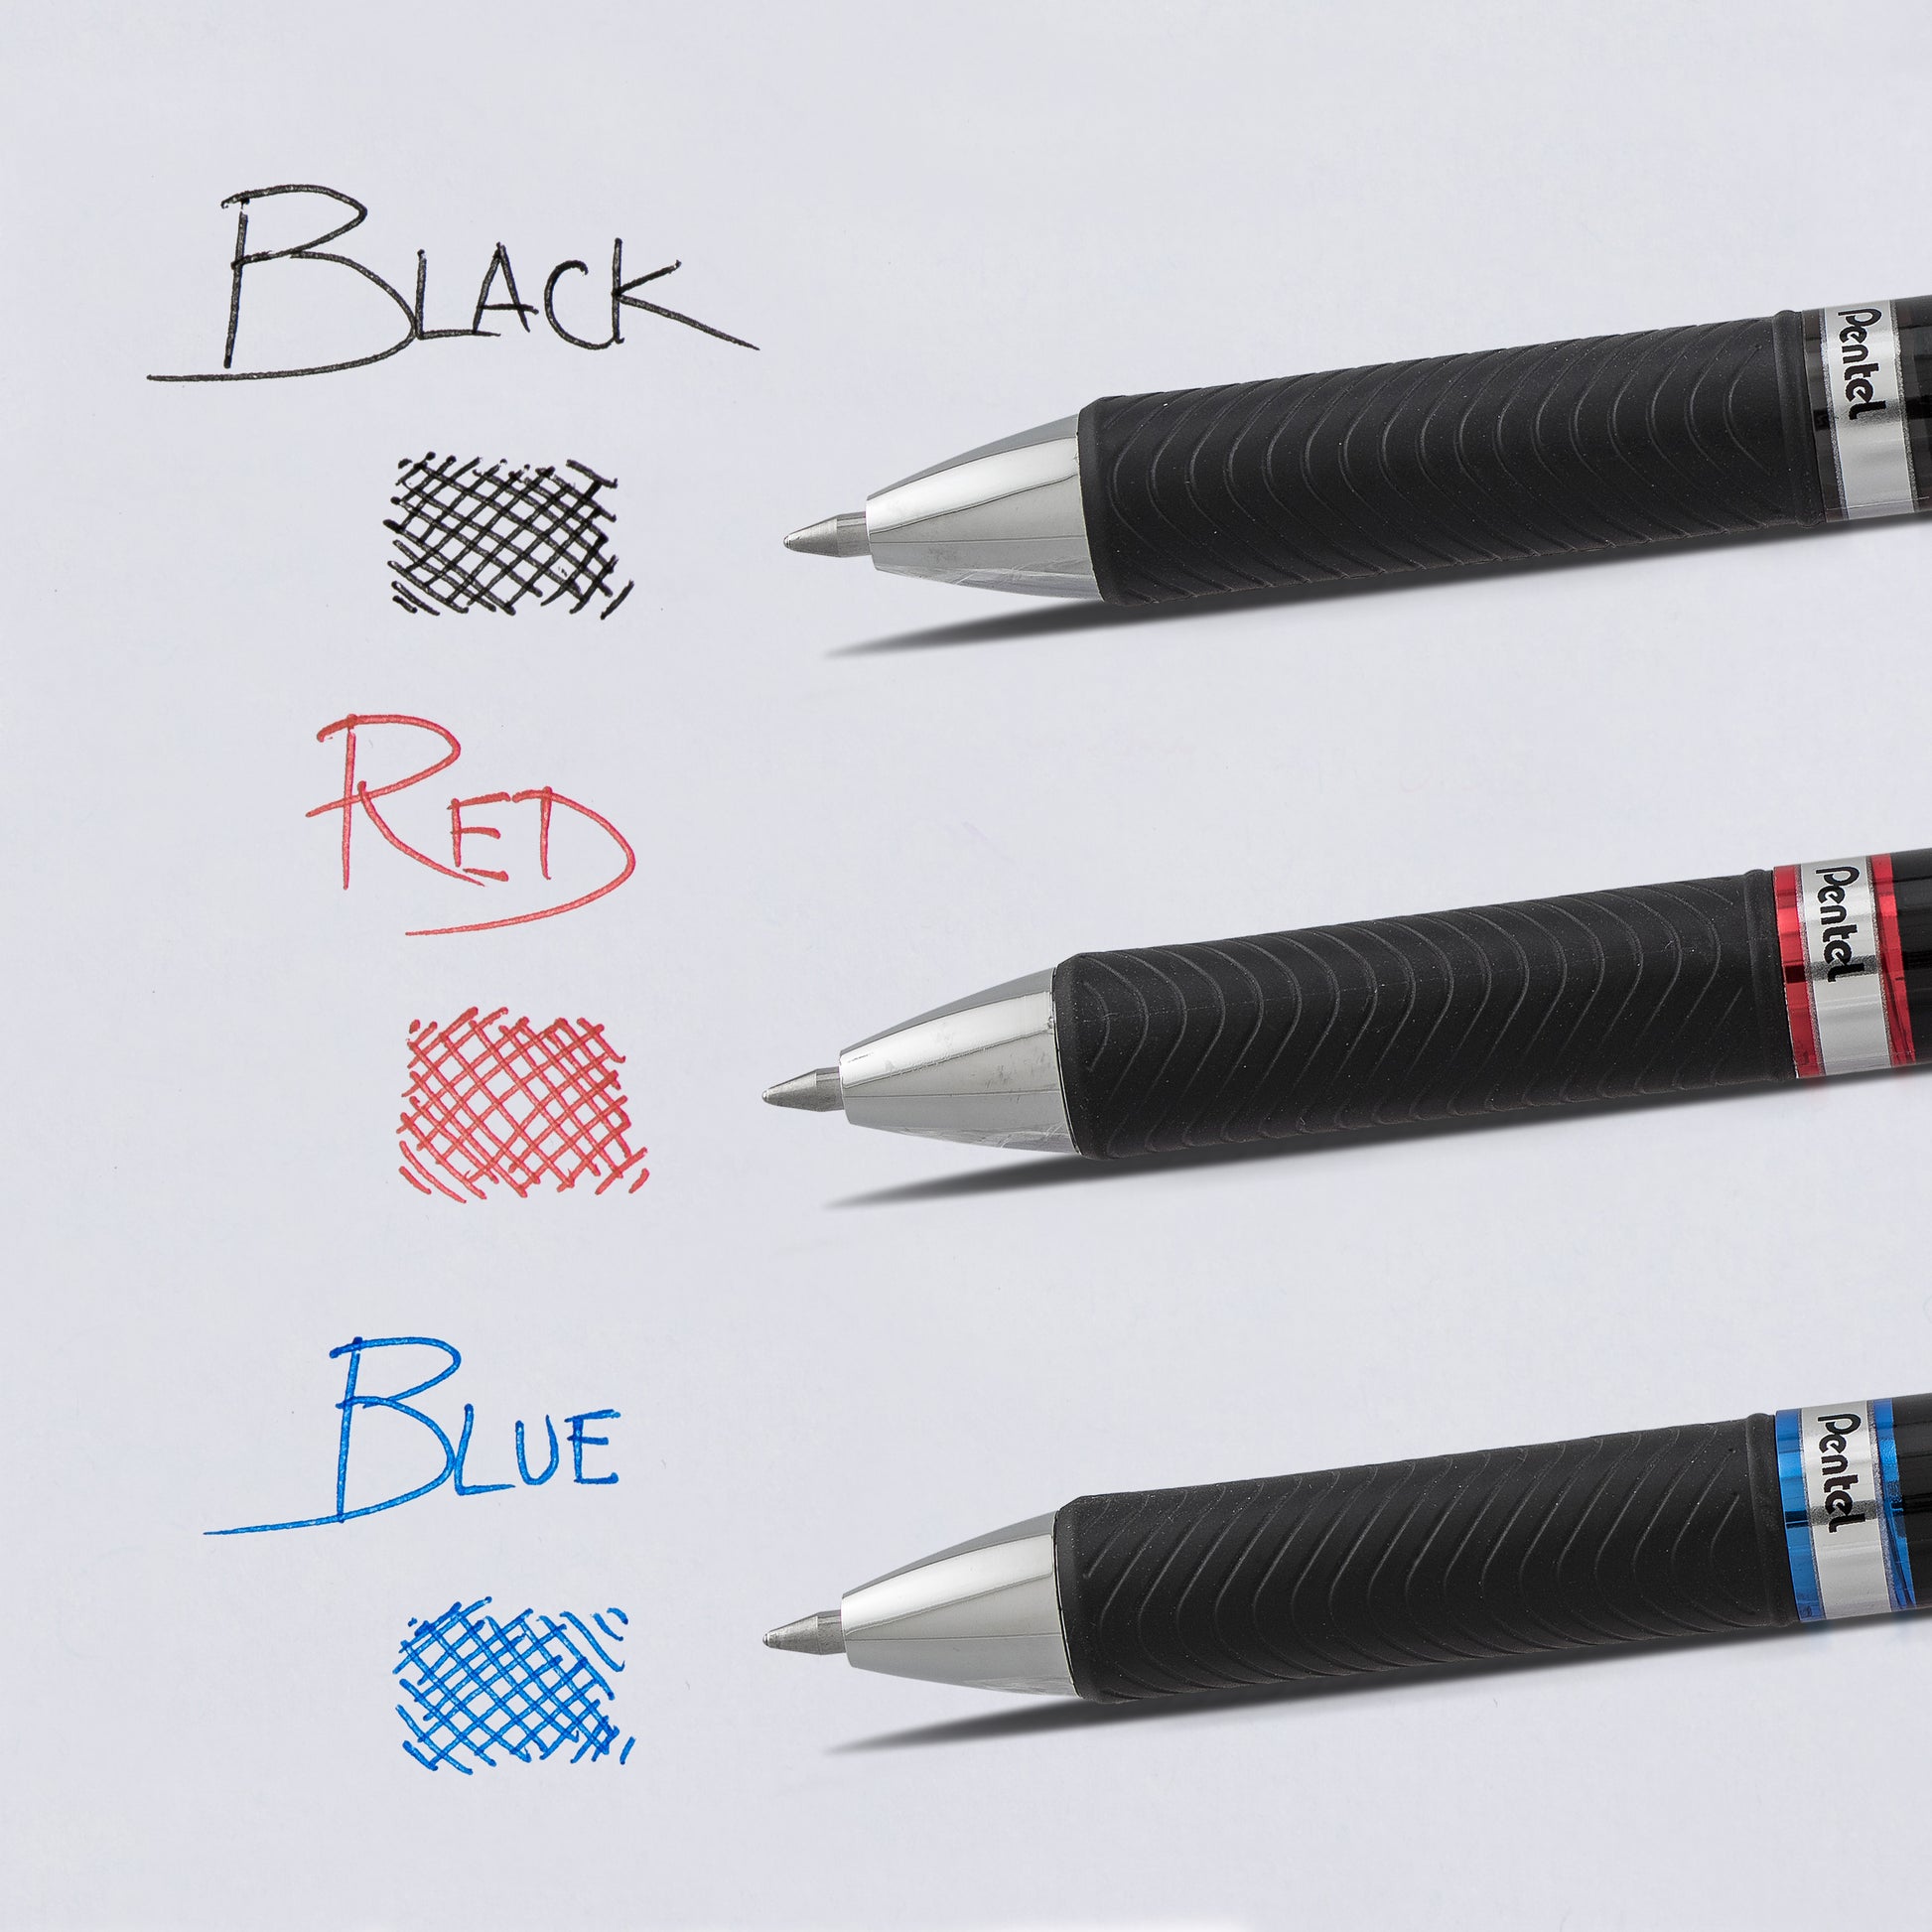 EnerGel PRO Permanent Gel Pen, (0.7mm) Medium Line, Assorted Ink (ABC) –  Pentel of America, Ltd.